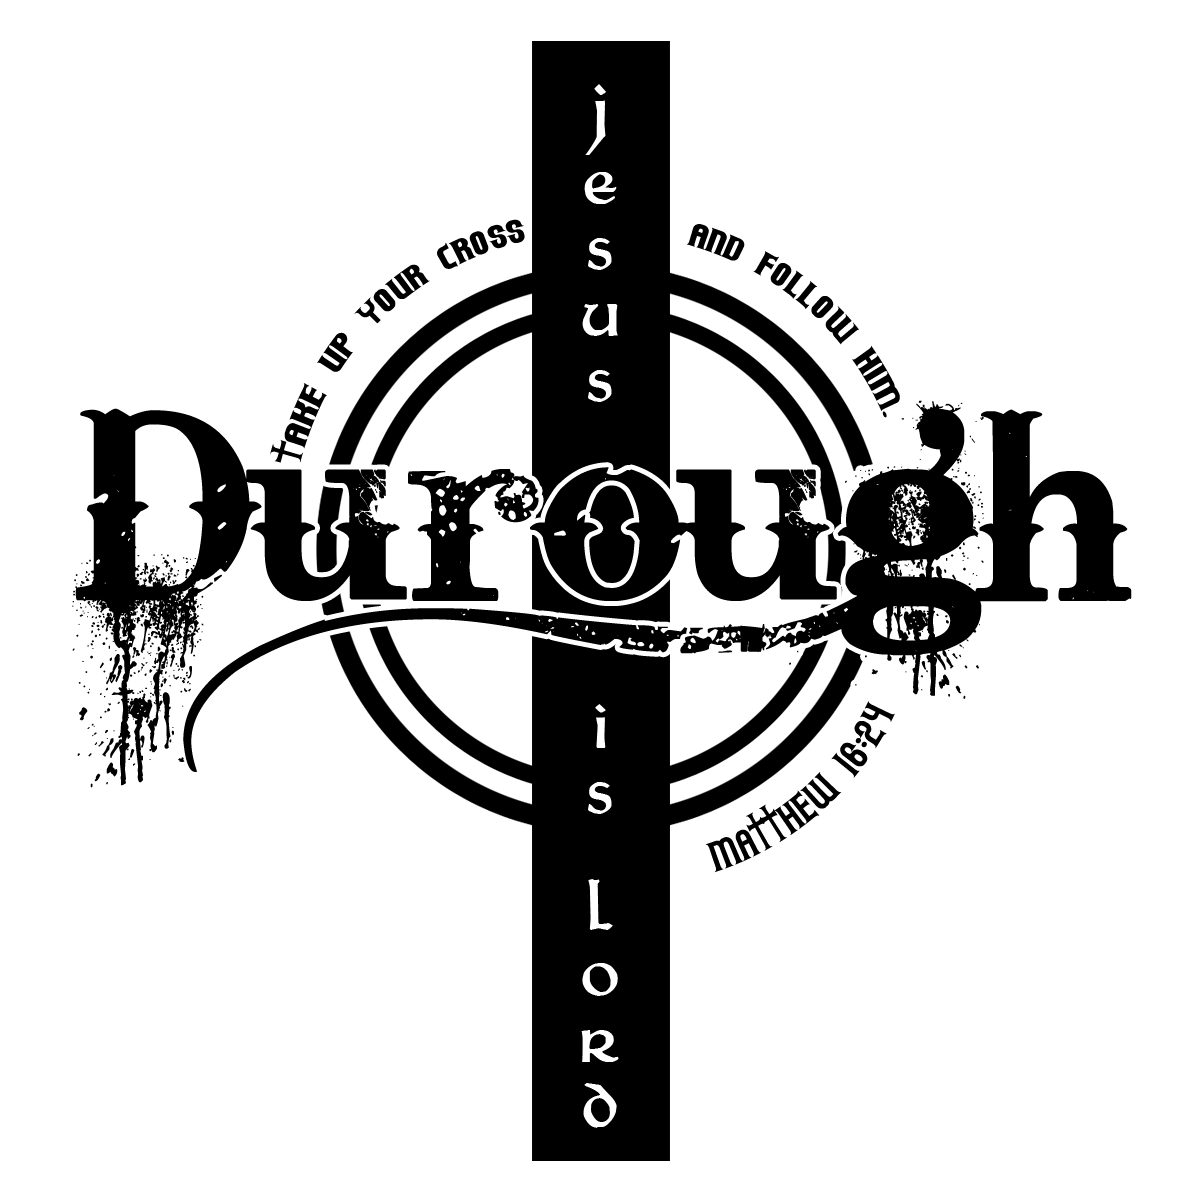 Durough cross: Jesus is Lord